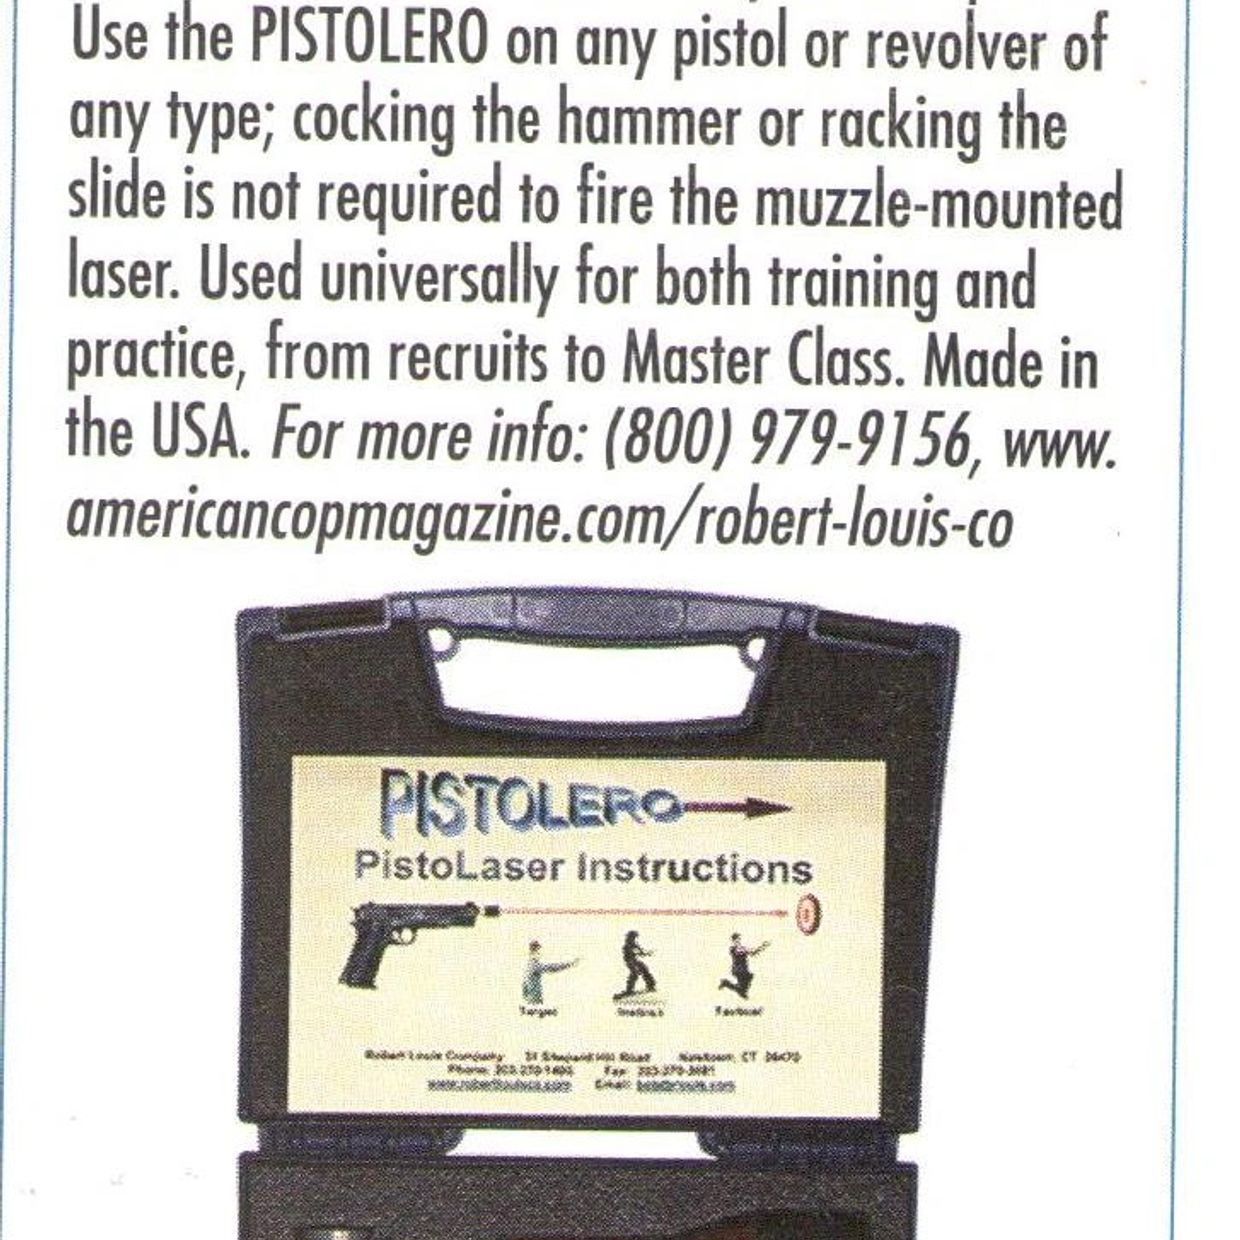 Review of Pistolero in American Cop Magazine